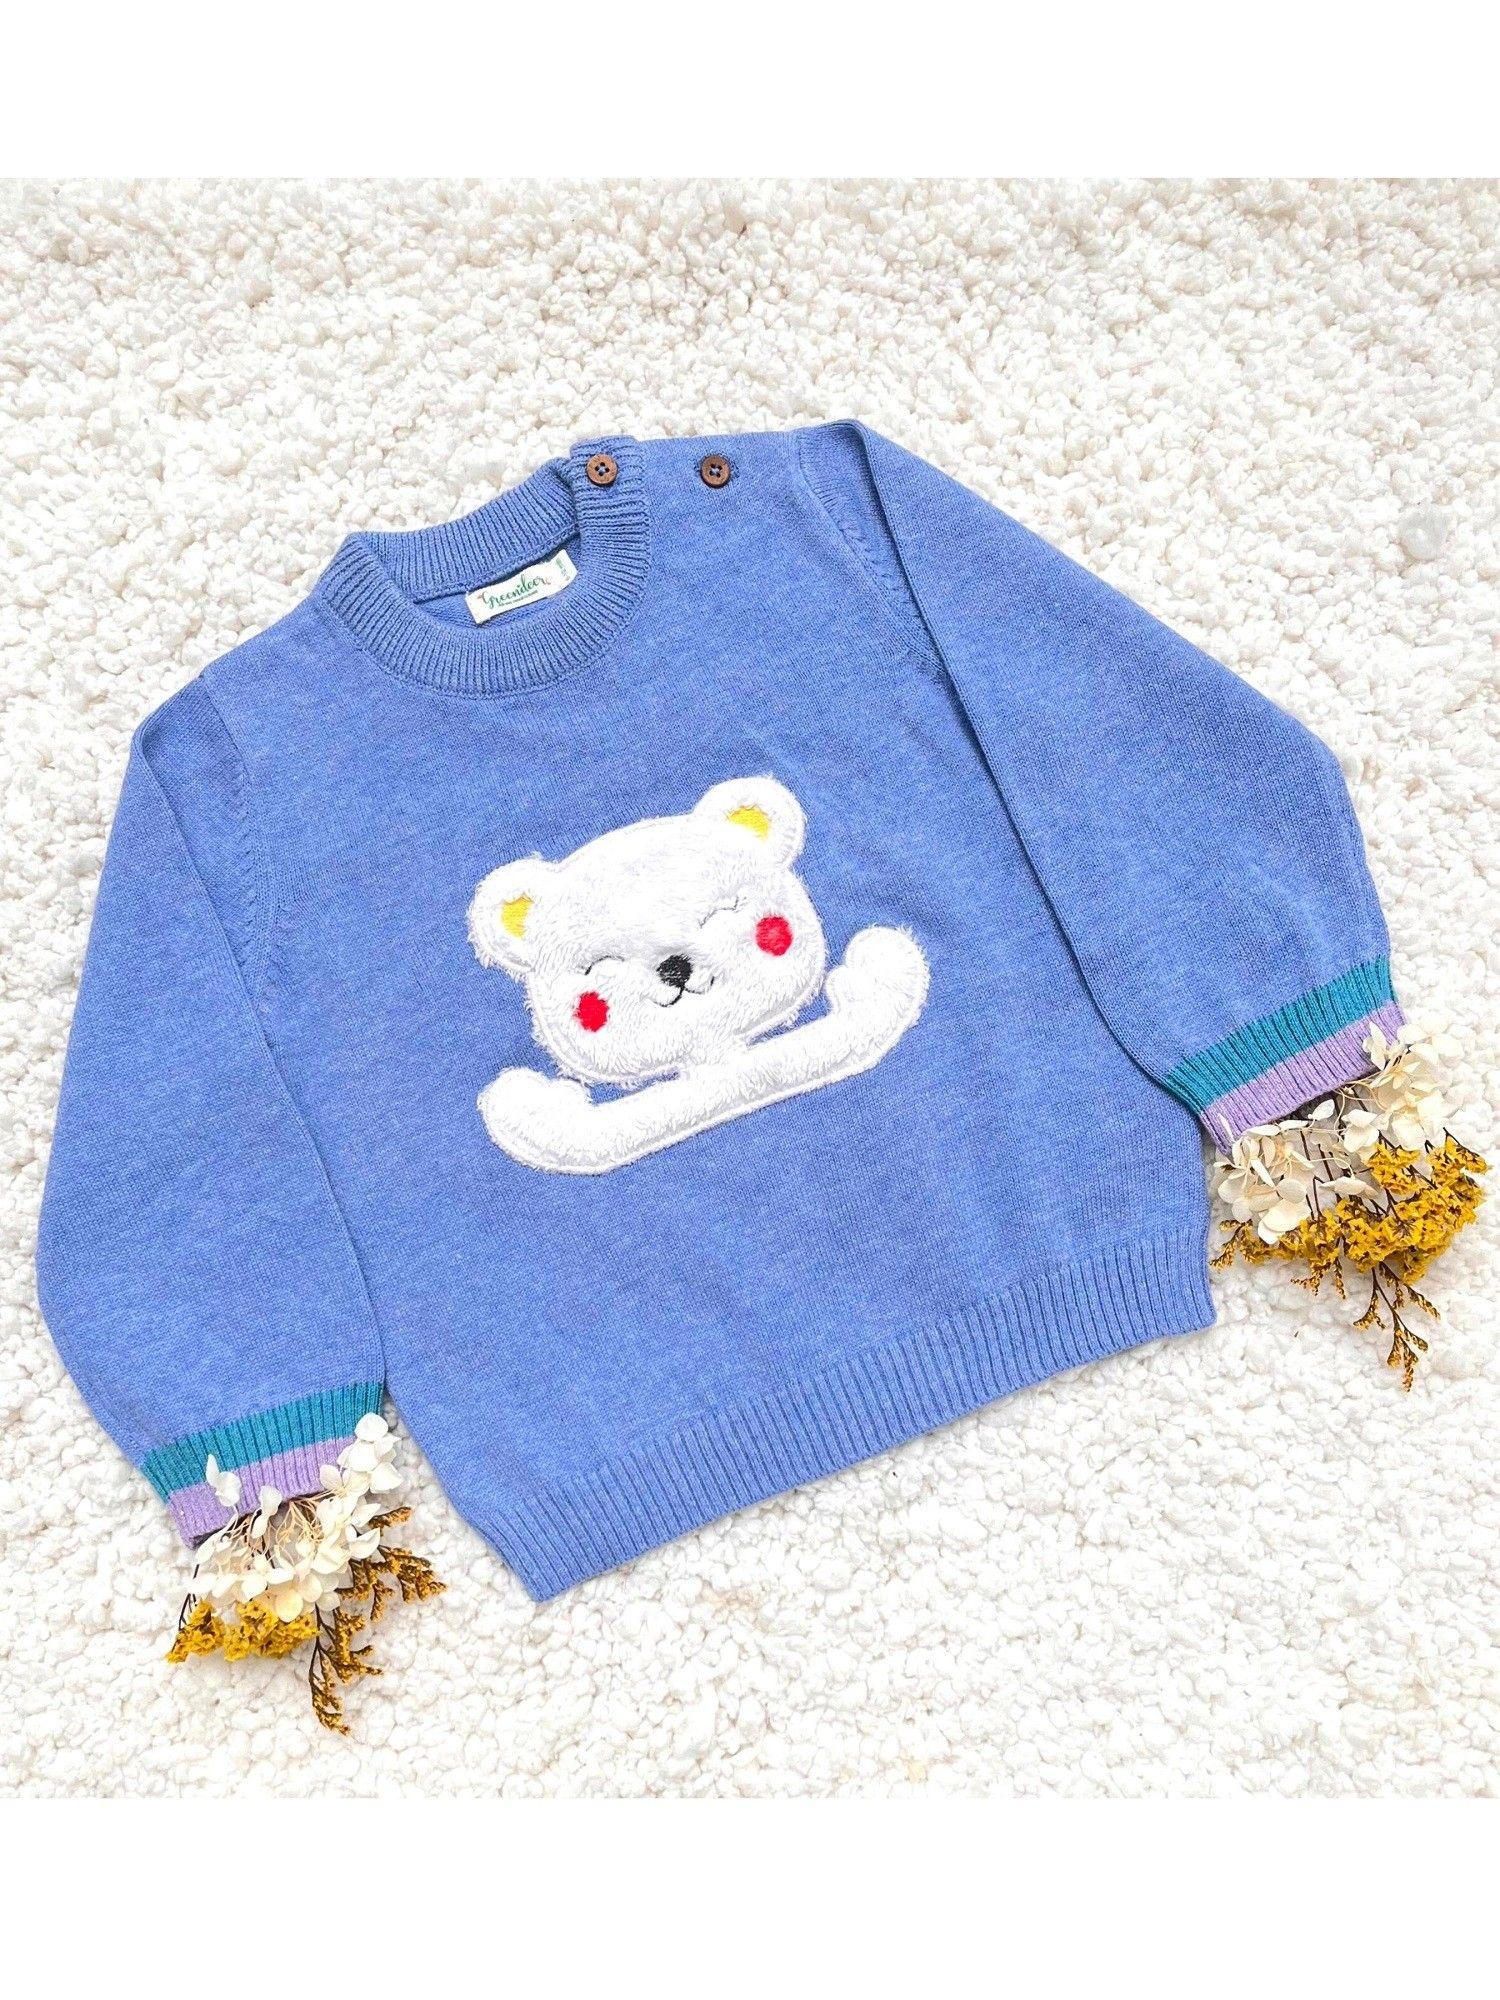 cuddly-bear-blue-sweater